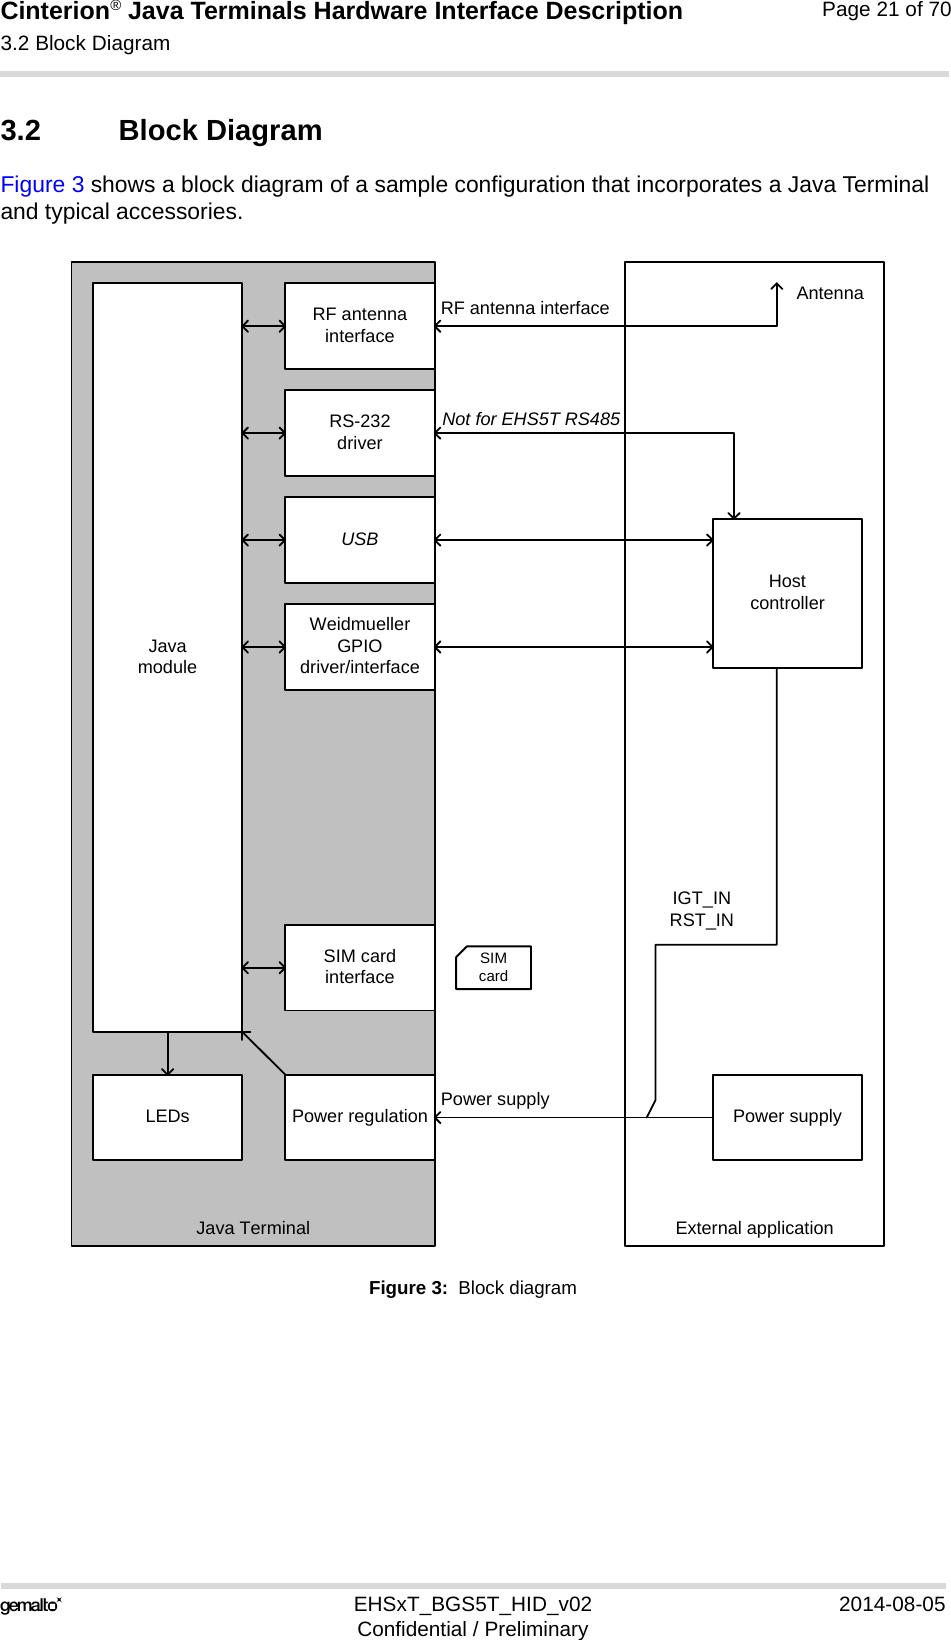 Cinterion® Java Terminals Hardware Interface Description3.2 Block Diagram35EHSxT_BGS5T_HID_v02 2014-08-05Confidential / PreliminaryPage 21 of 703.2 Block DiagramFigure 3 shows a block diagram of a sample configuration that incorporates a Java Terminal and typical accessories.Figure 3:  Block diagramJava TerminalJavamoduleRS-232driverUSBSIM cardinterfacePower regulationRF antennainterfaceLEDsRF antenna interfaceHostcontrollerPower supplyExternal applicationPower supplySIMcardAntennaIGT_INRST_INWeidmueller GPIOdriver/interfaceNot for EHS5T RS485